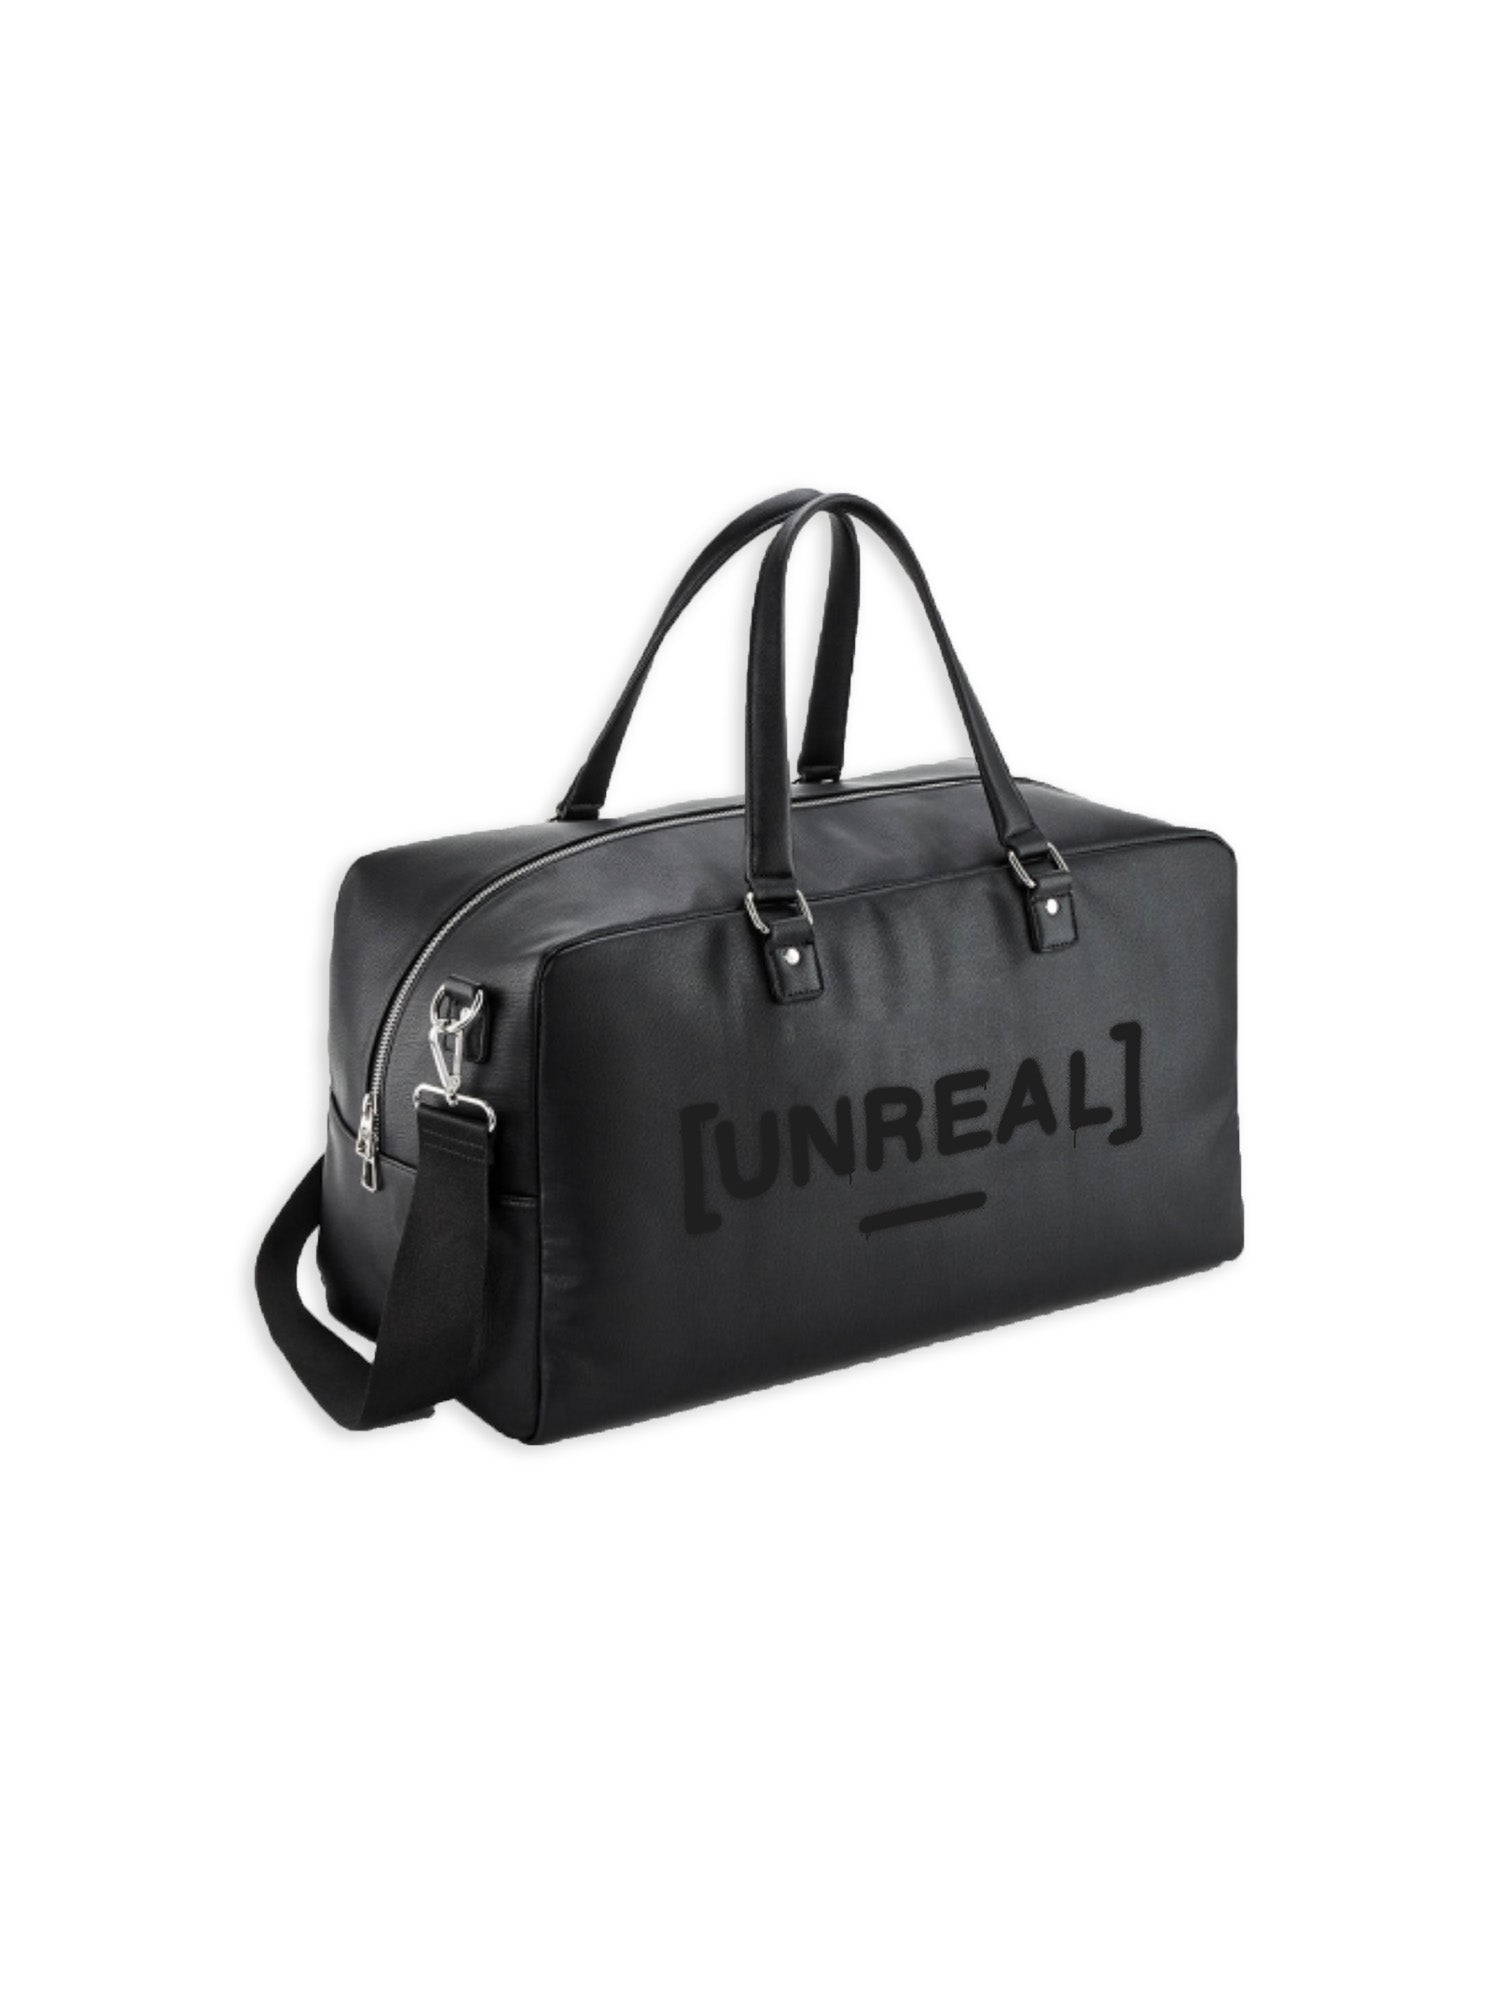 UNREAL Duffle Bag - Weekender -  high quality streetwear - made from vegan leather - printed [UNREAL] graffiti logo.